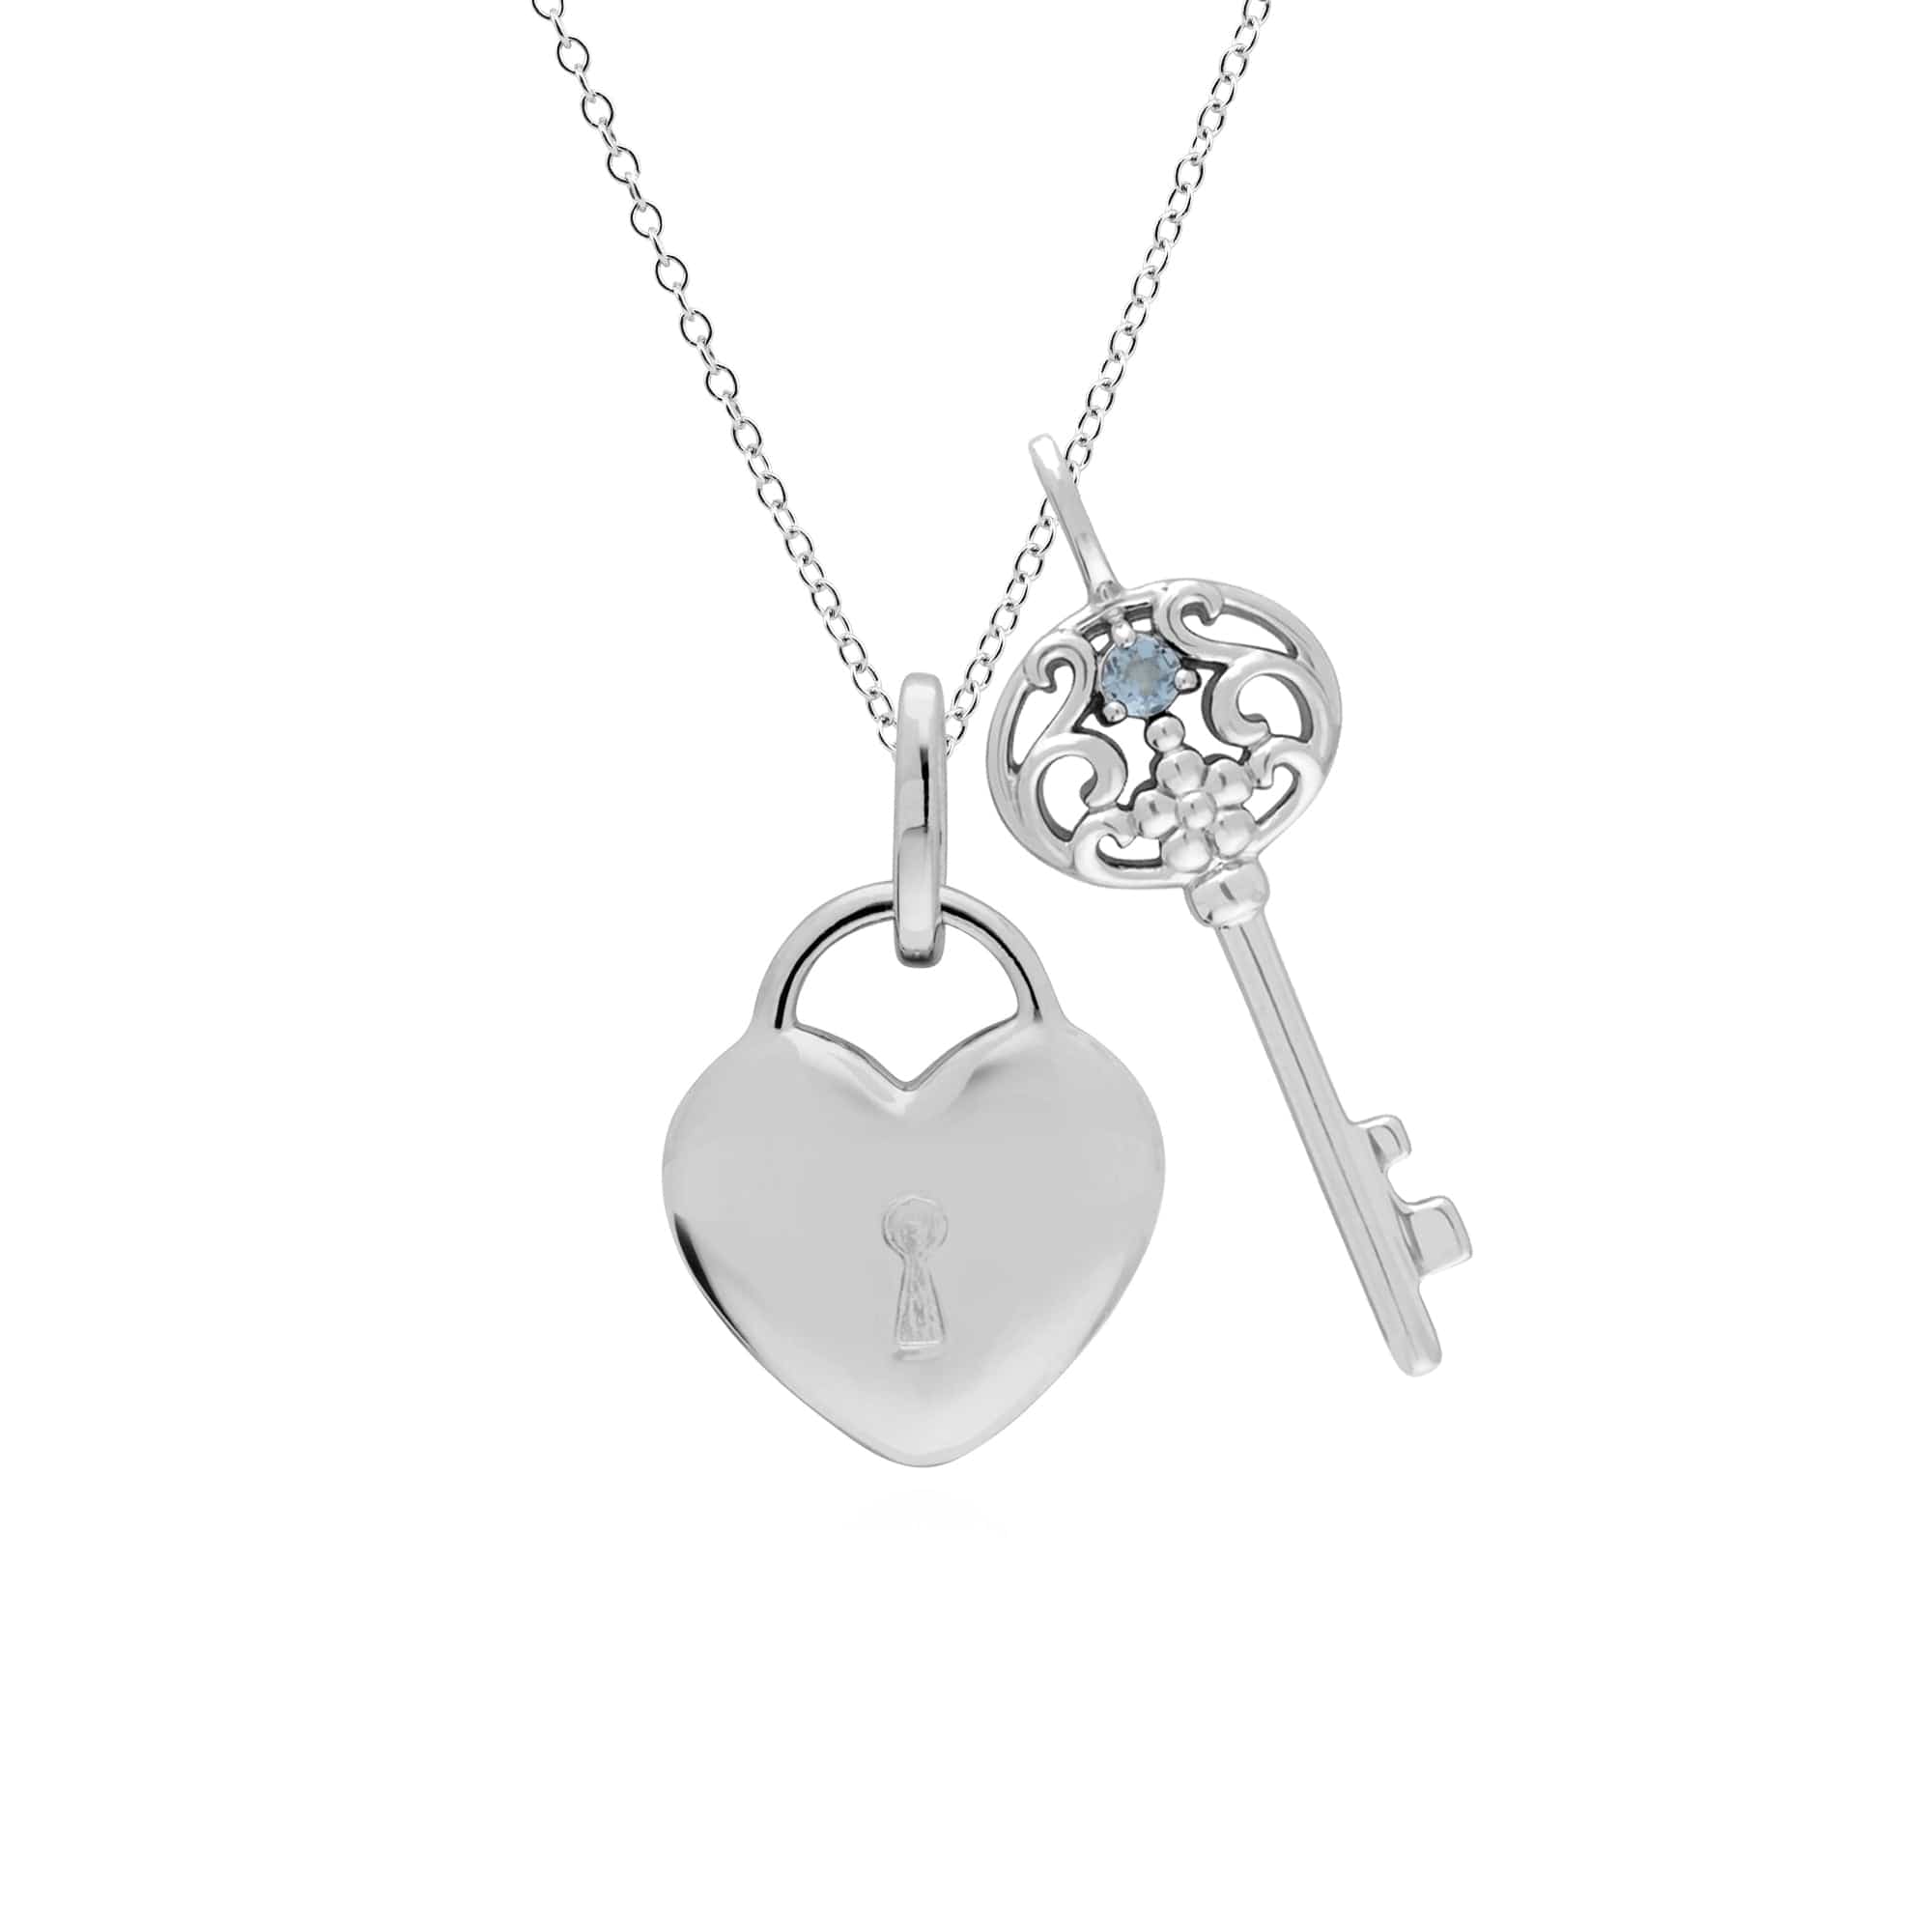 270P026813925-270P027001925 Classic Heart Lock Pendant & Aquamarine Big Key Charm in 925 Sterling Silver 1